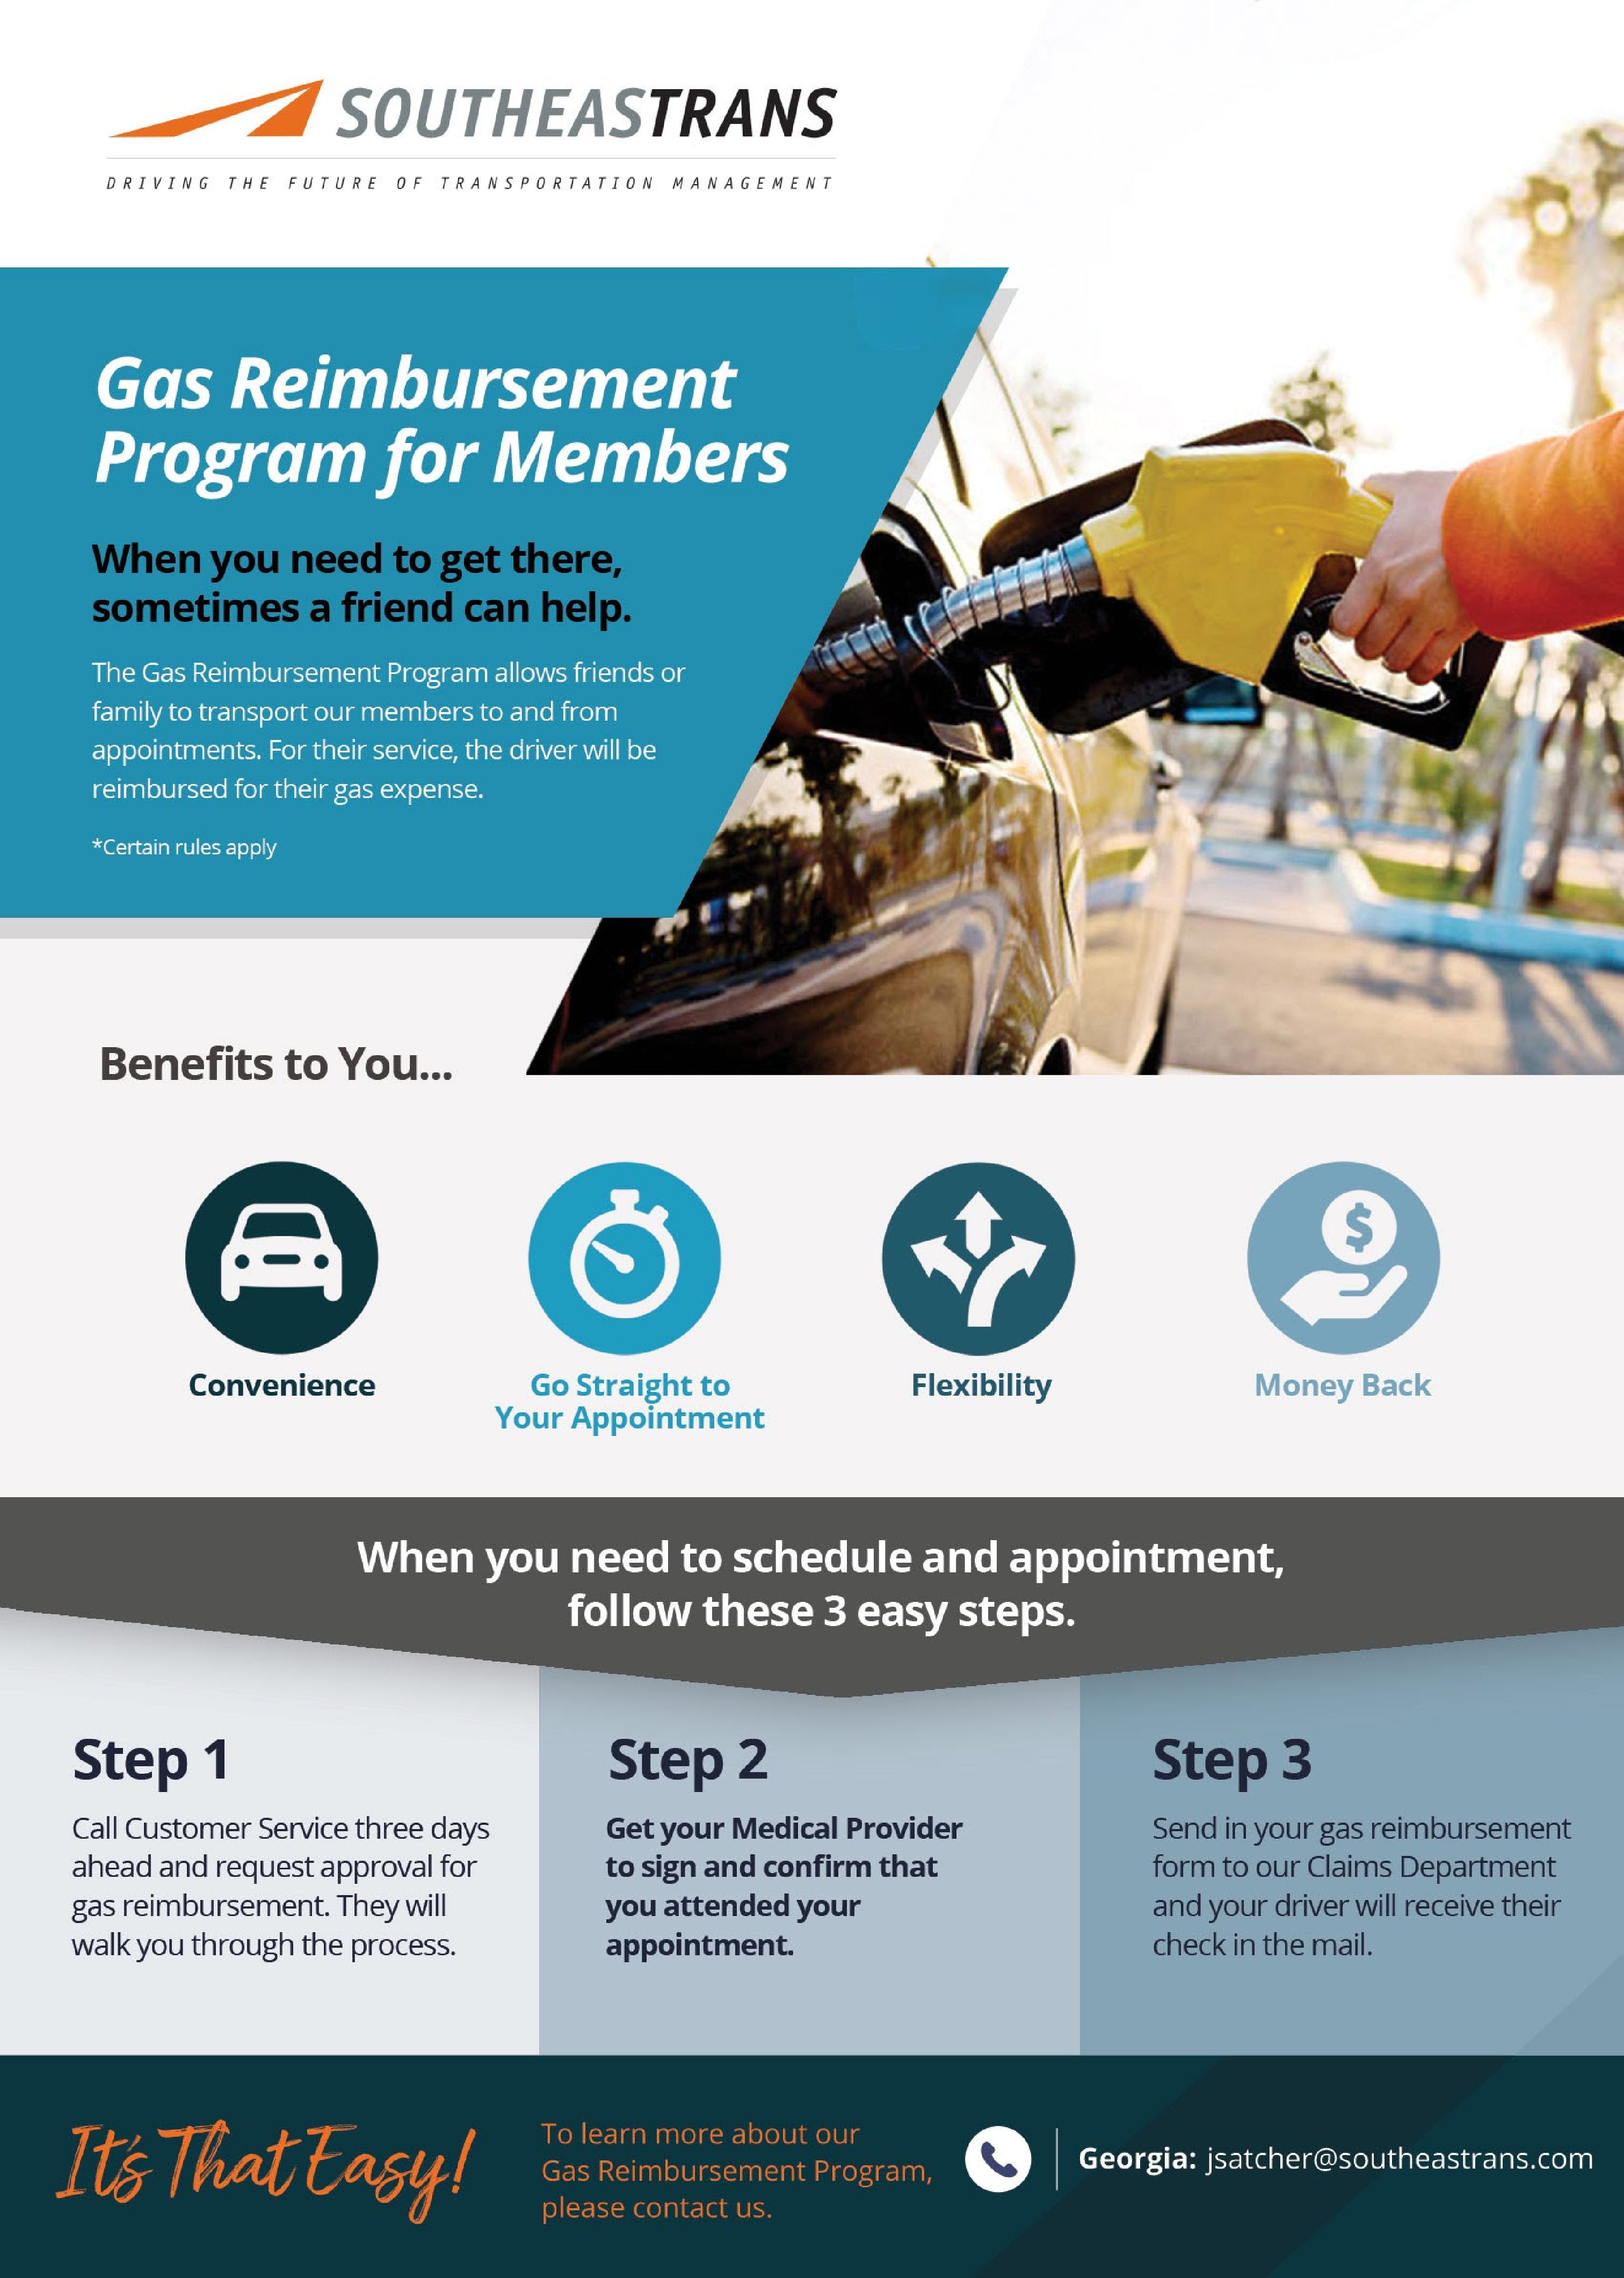 gas-reimbursement-program-georgia-southeastrans